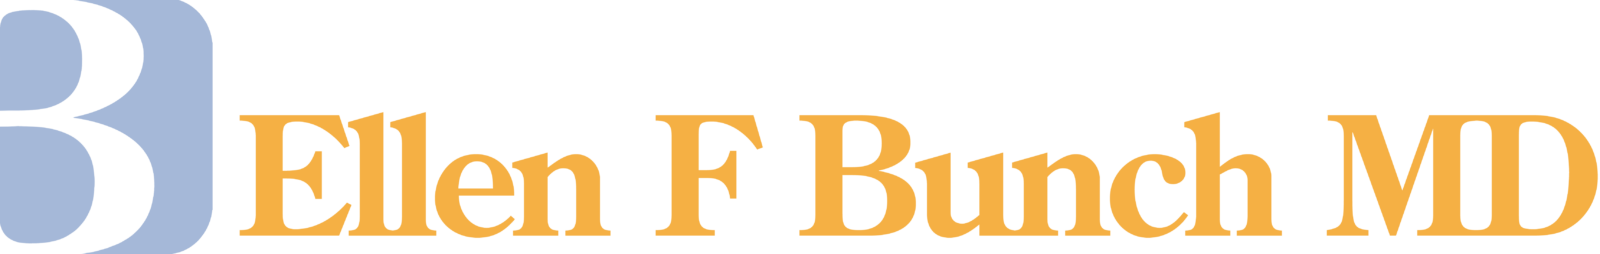 Site logo - https://ellenbunchmd.com/